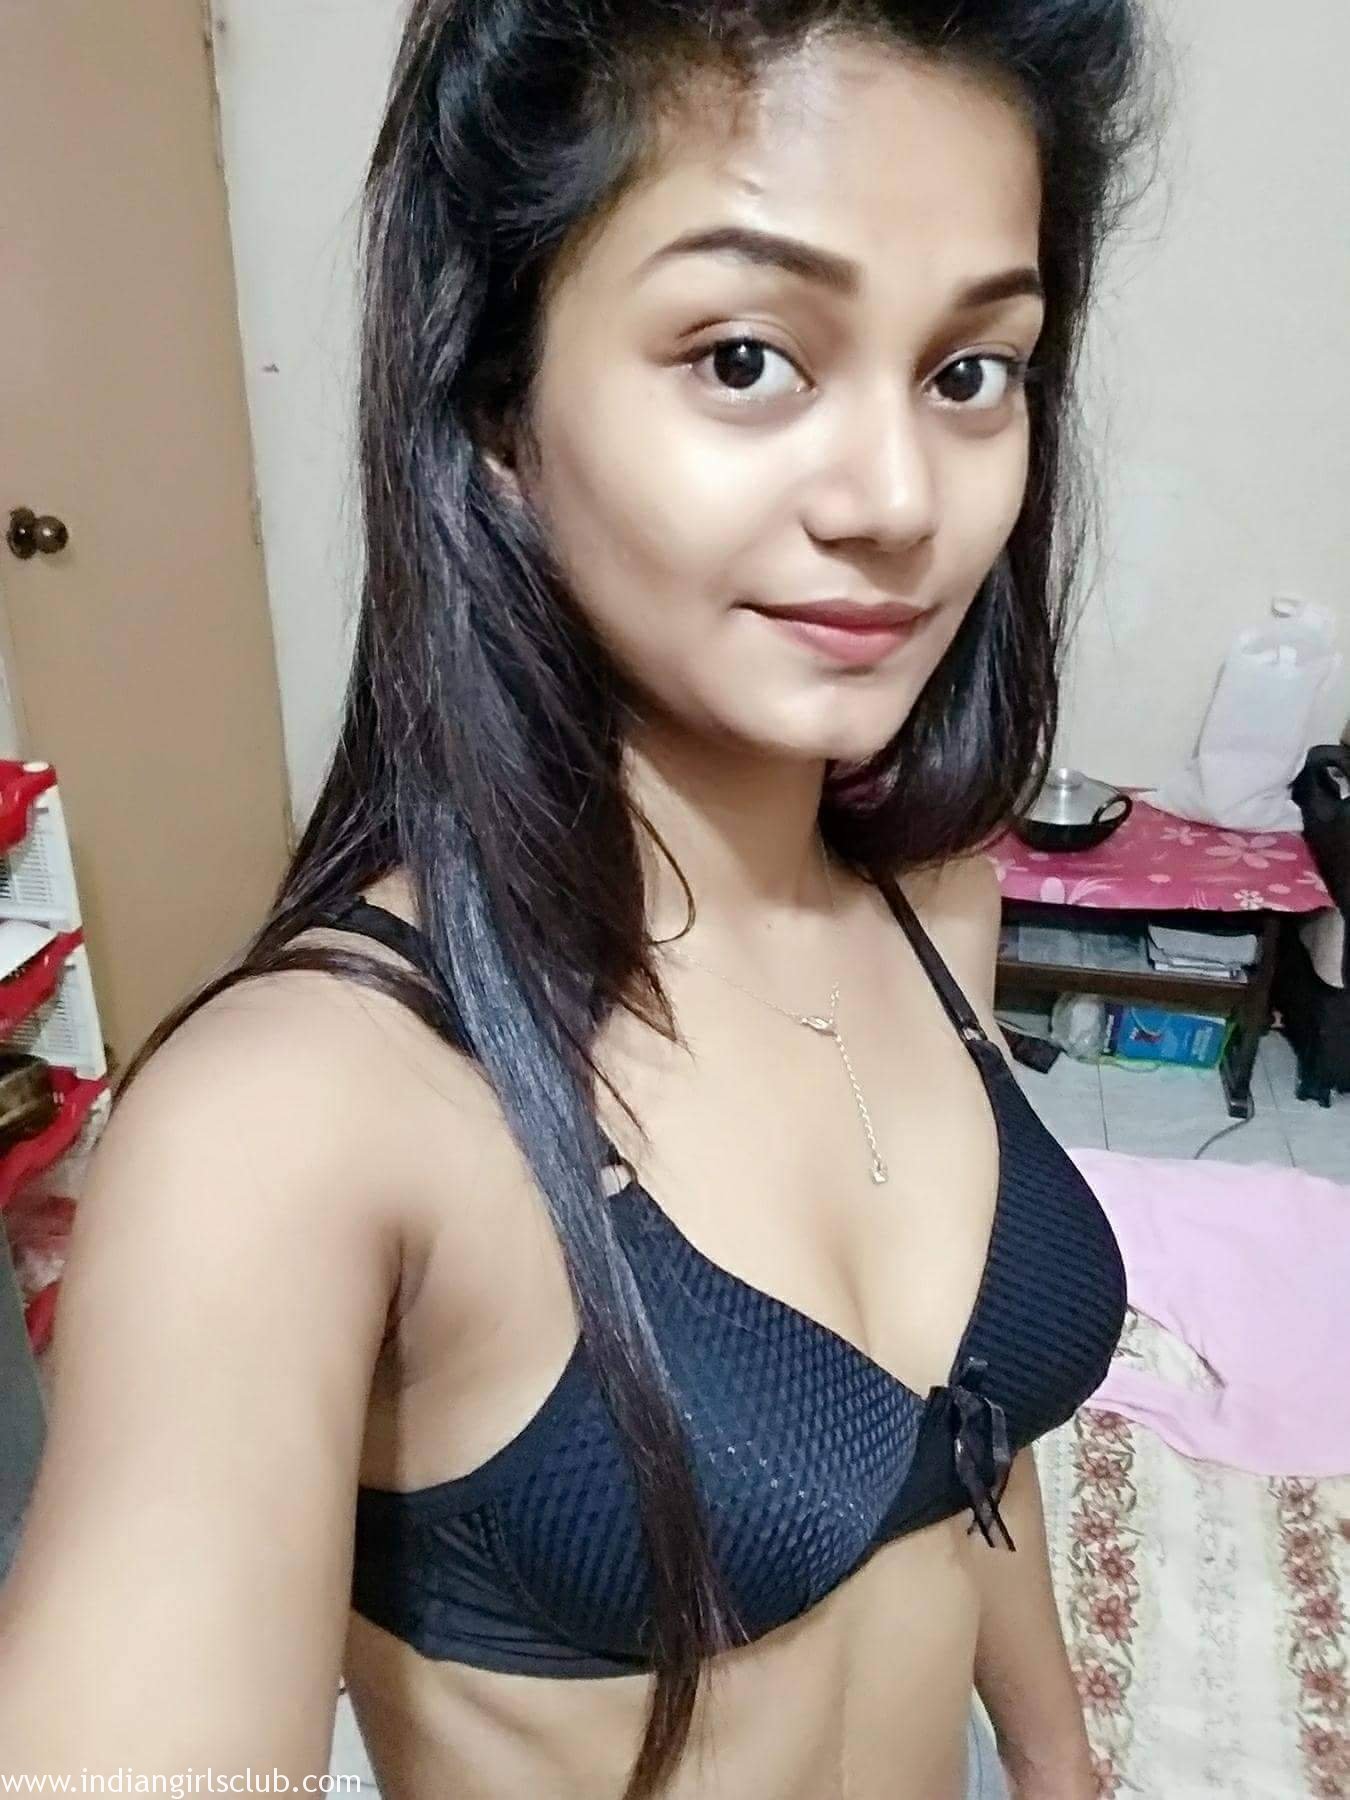 juicy_indian_teen_homemade_porn_20 - Indian Girls Club